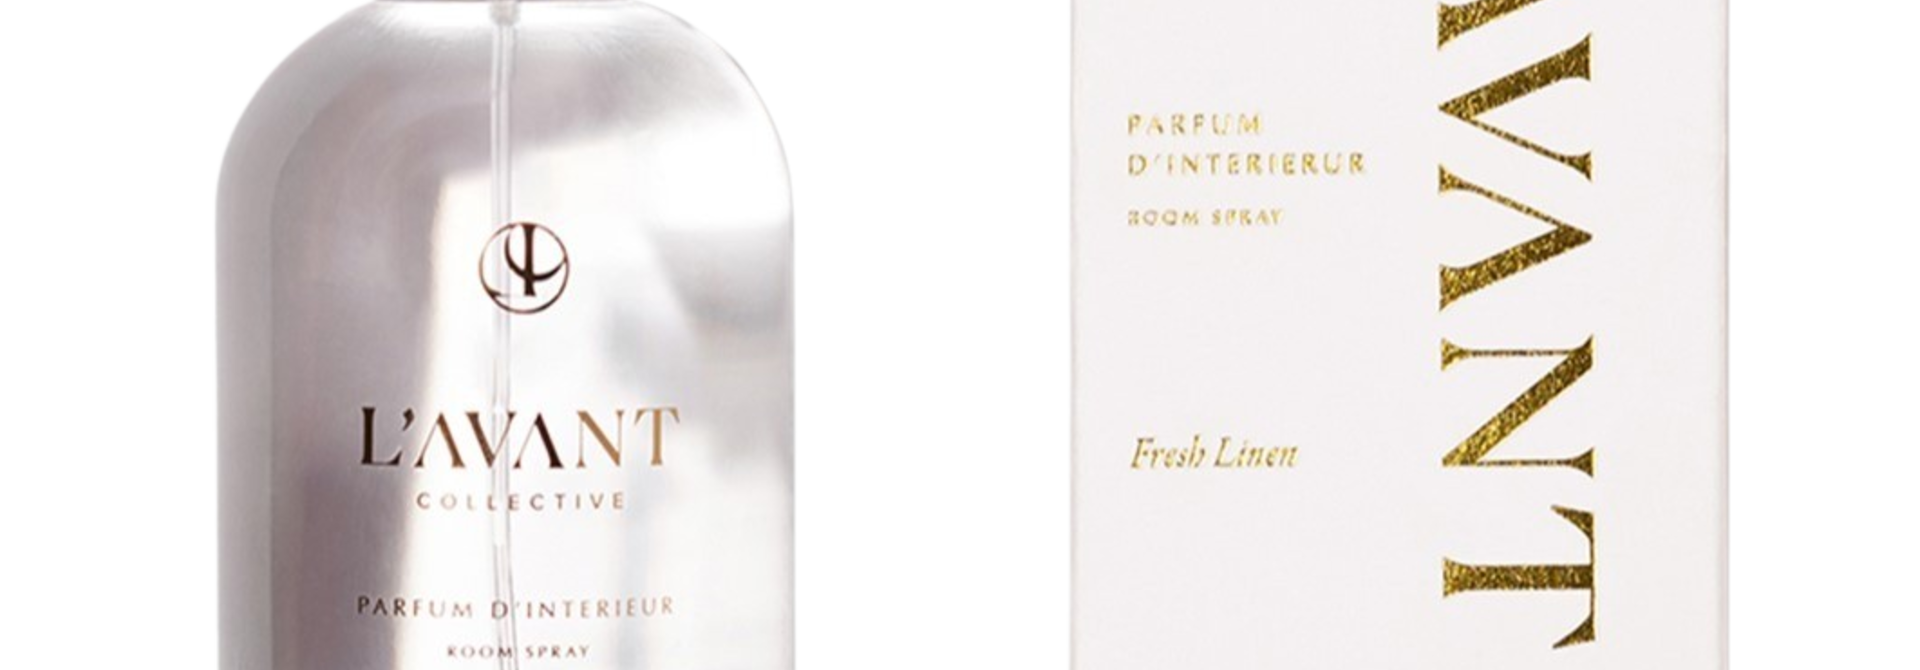 Fresh Linen | The Fragrance Collection, Room Spray - 100 mL